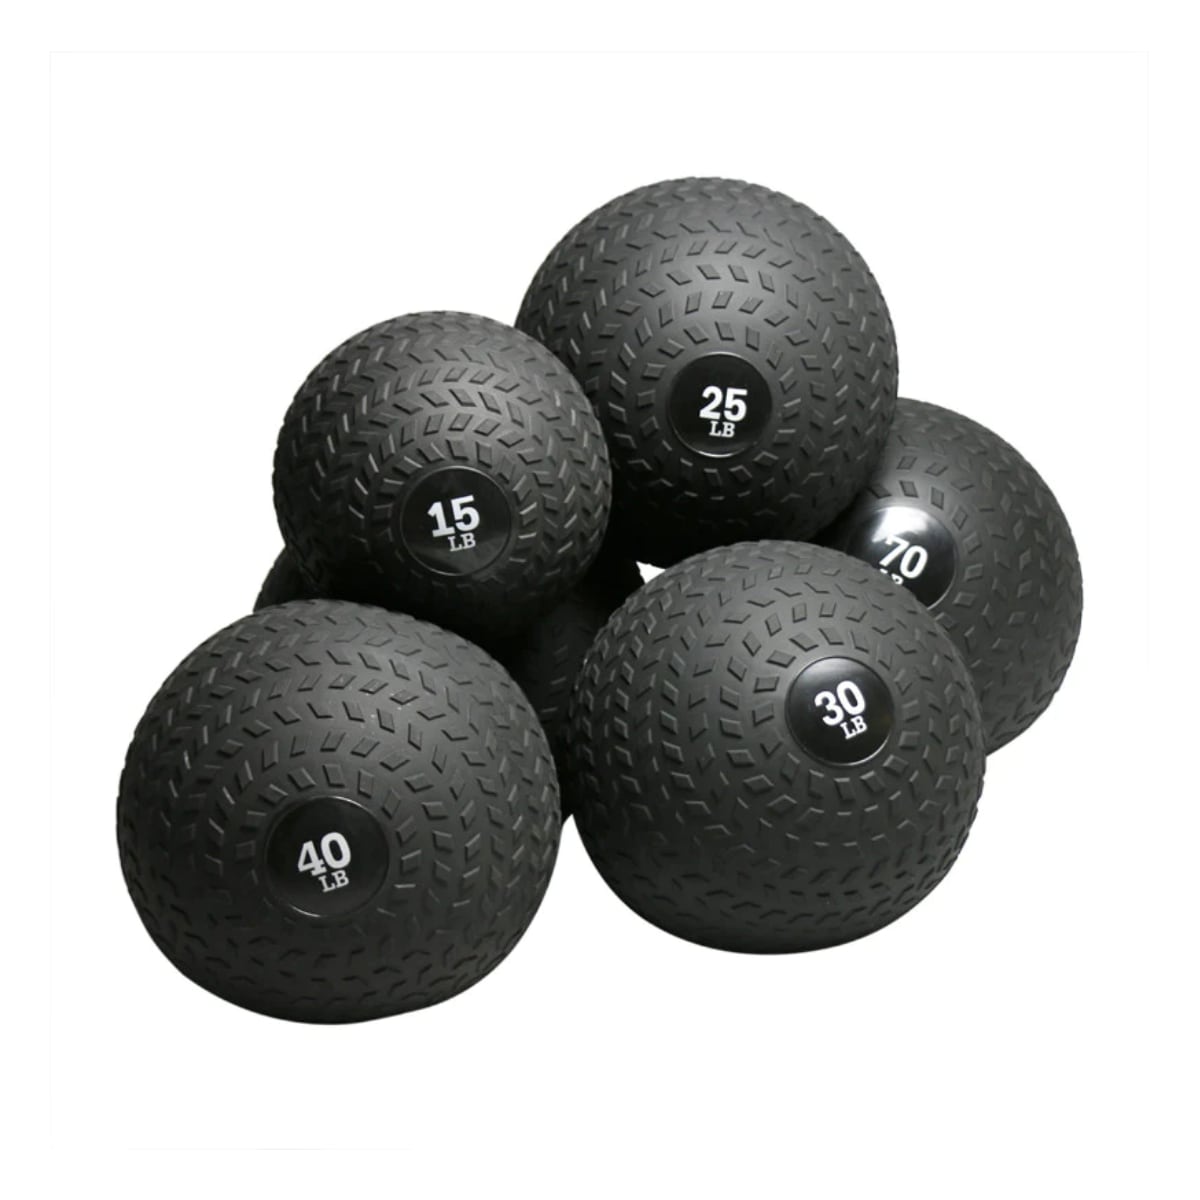 AmericanBarbell Slam ball 30 lb